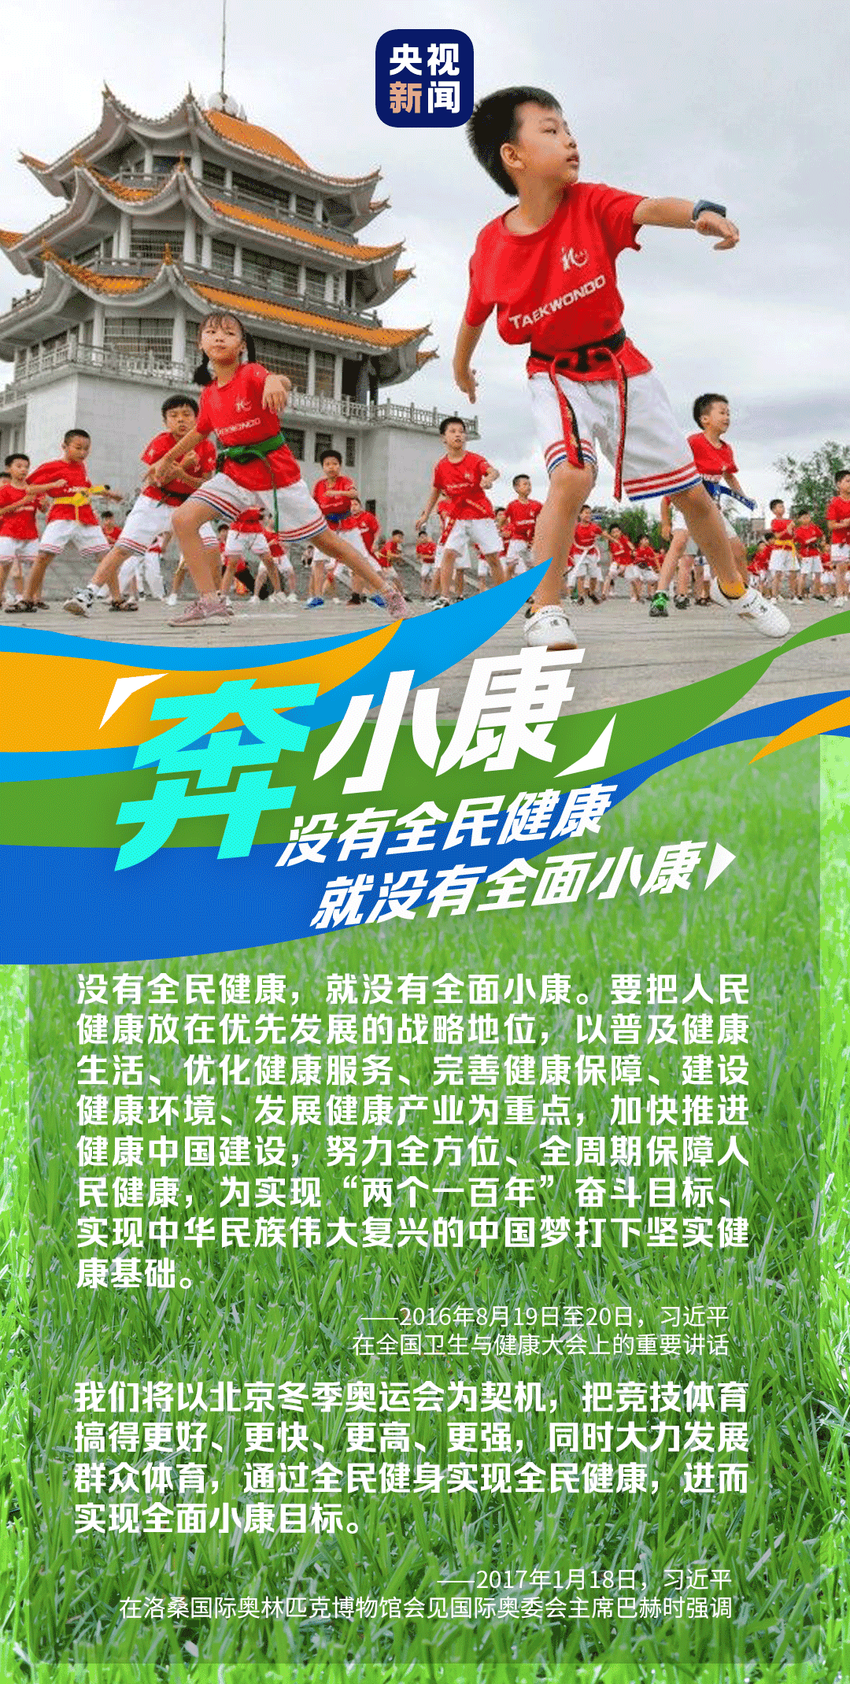 Hari Olahraga Nasional, Xi Jinping Serukan Masyarakat Rajin Berolahraga demi Rajin Bekerja_fororder_kc7